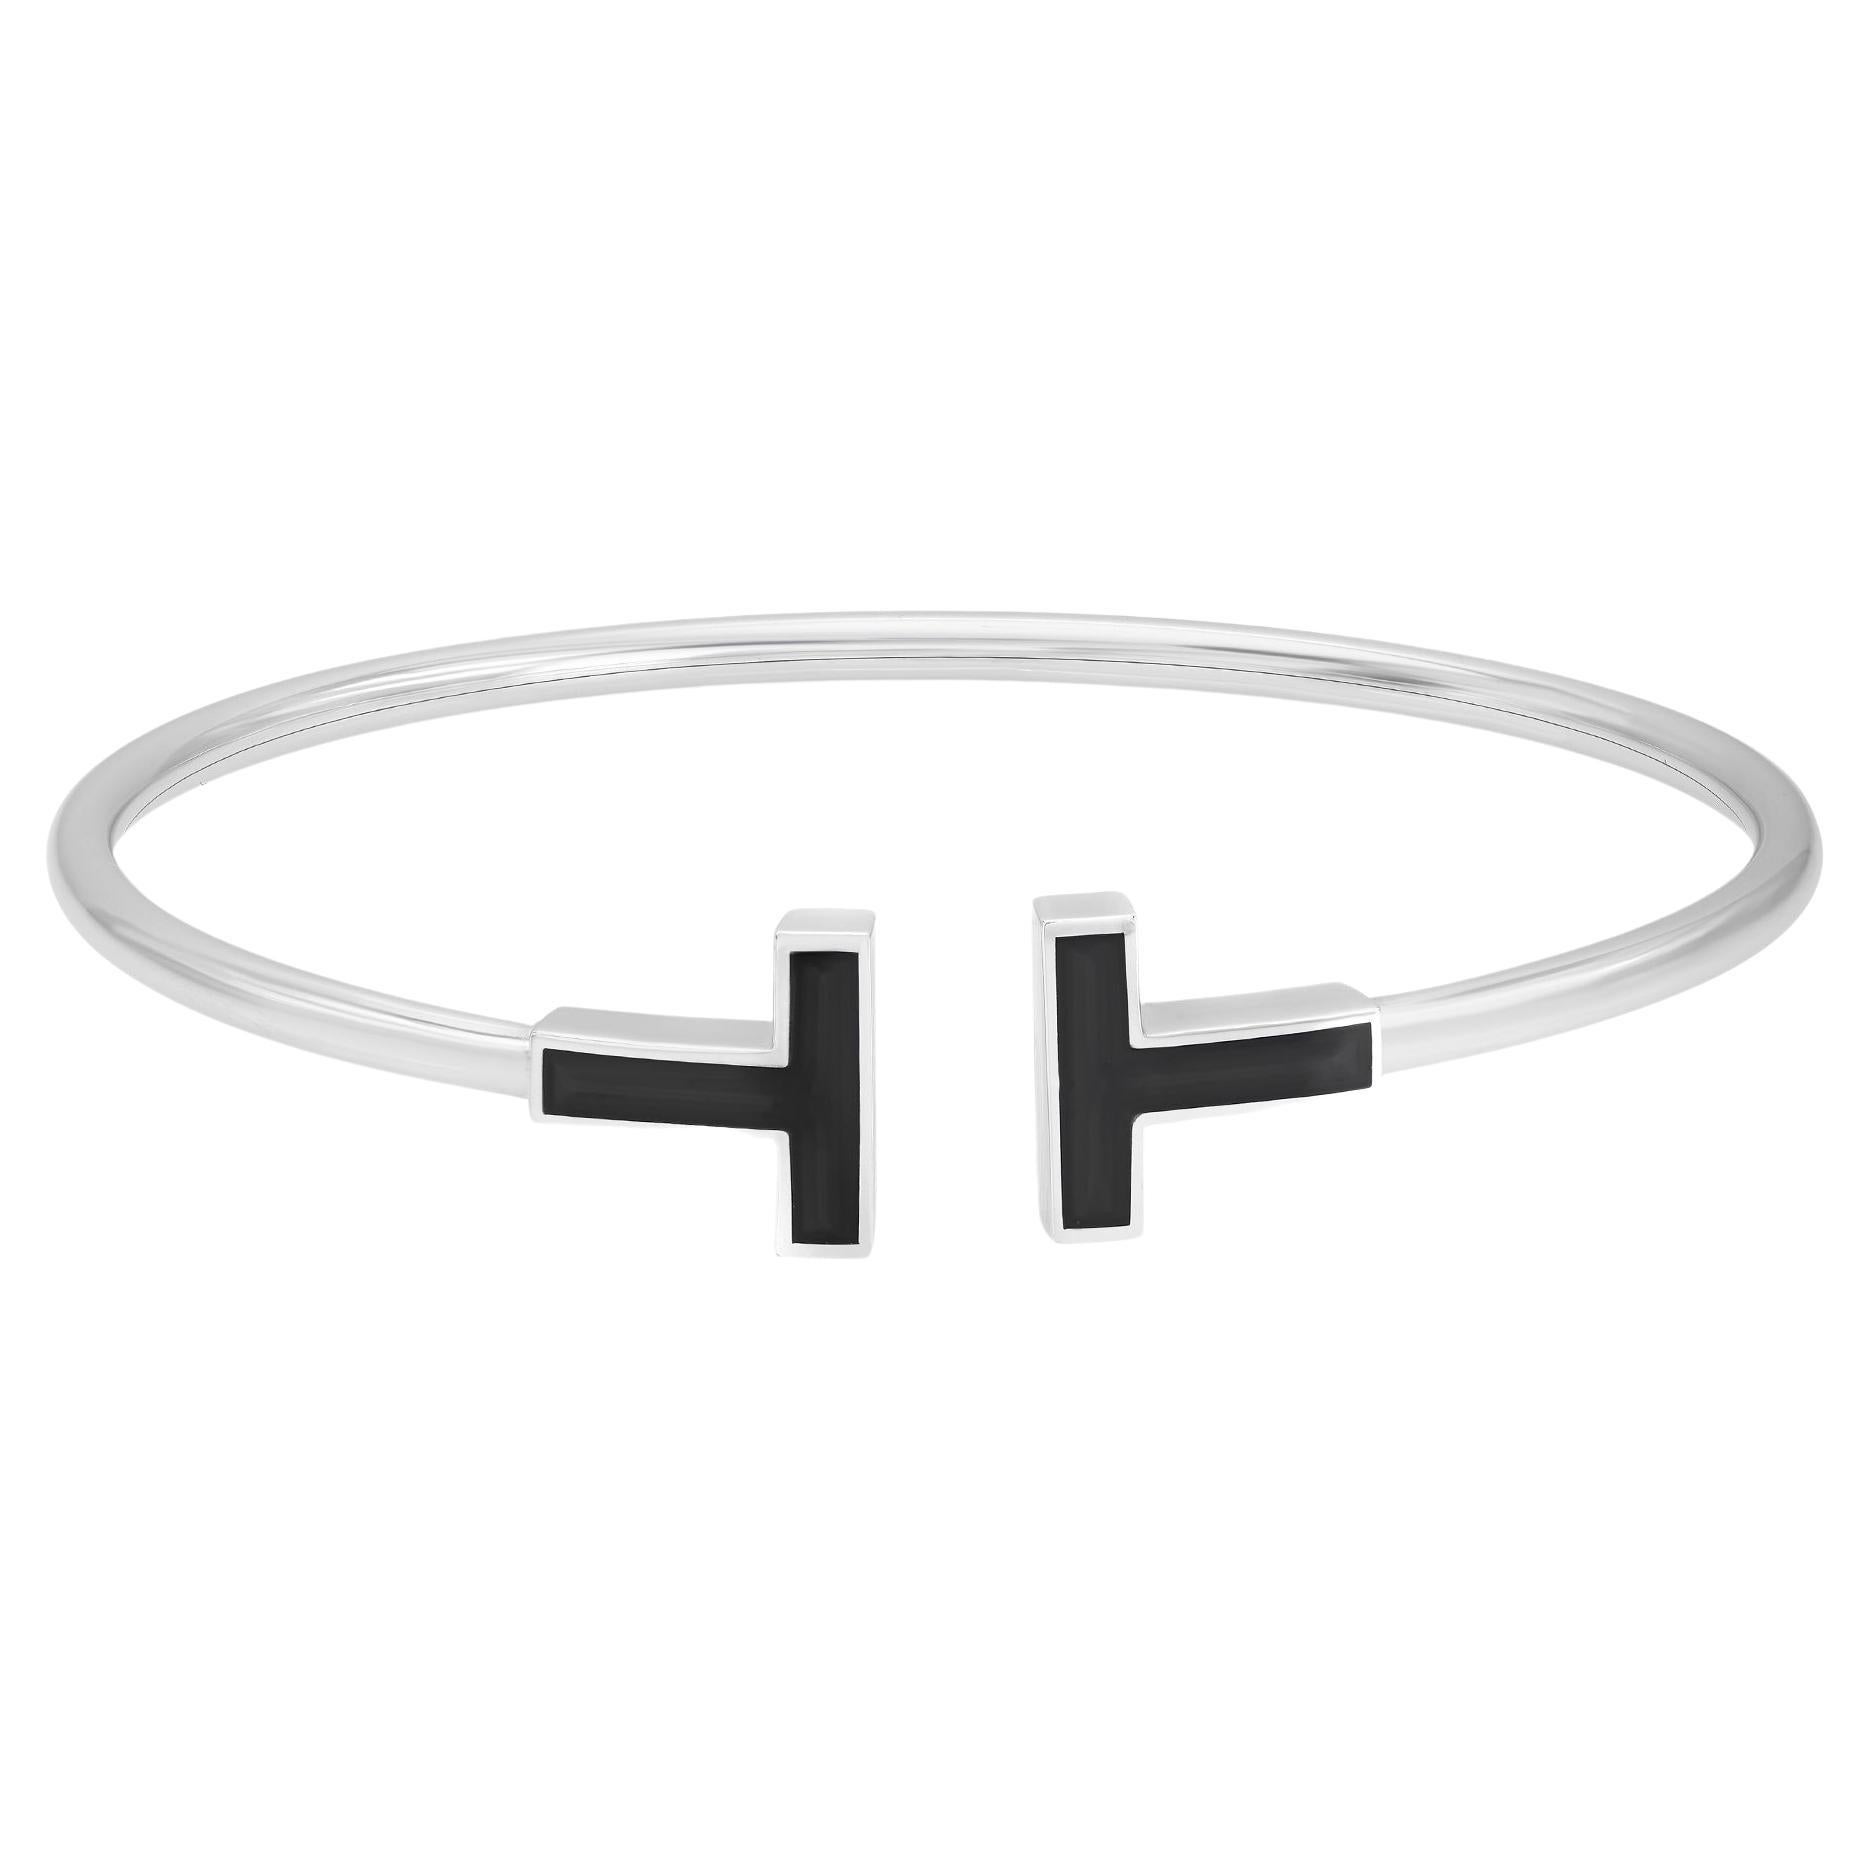 How do I attach a Tiffany T wire bracelet?